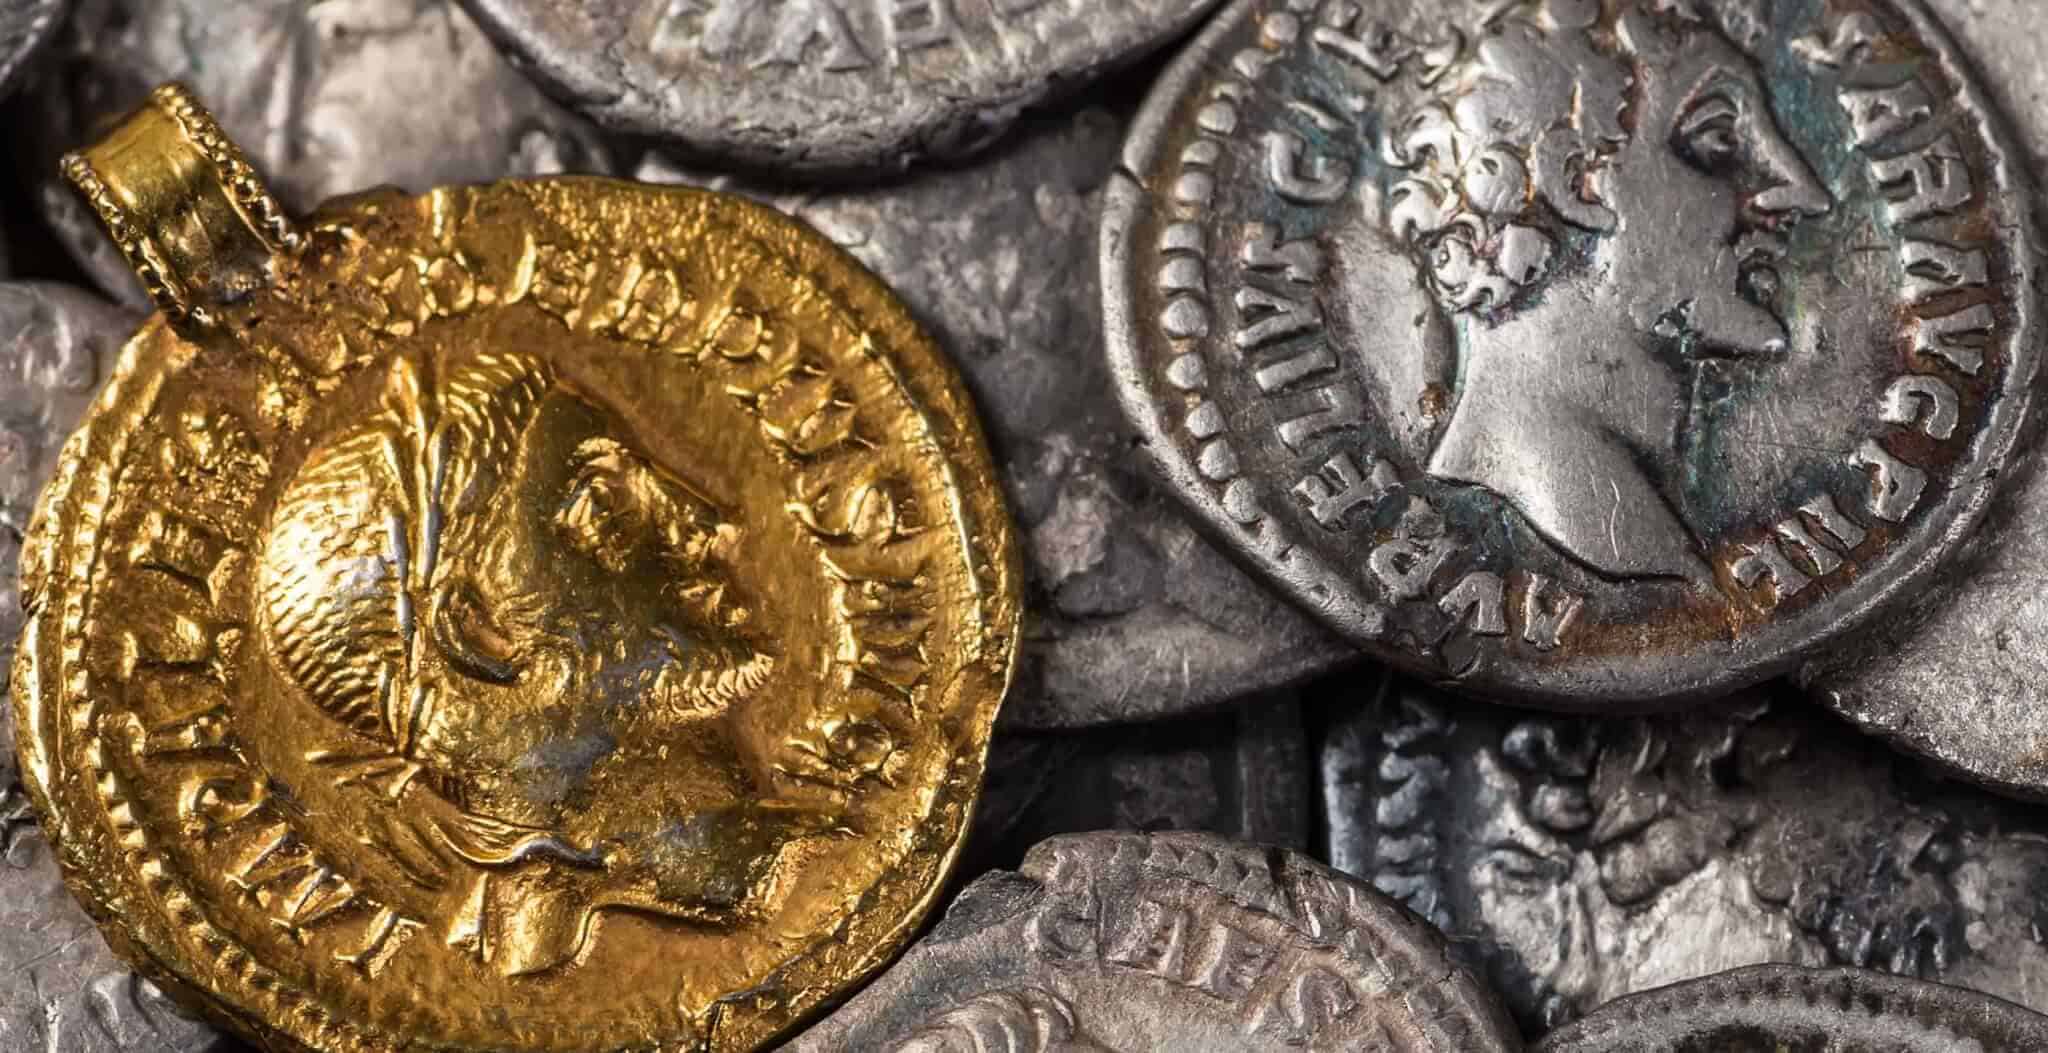 roman coinage